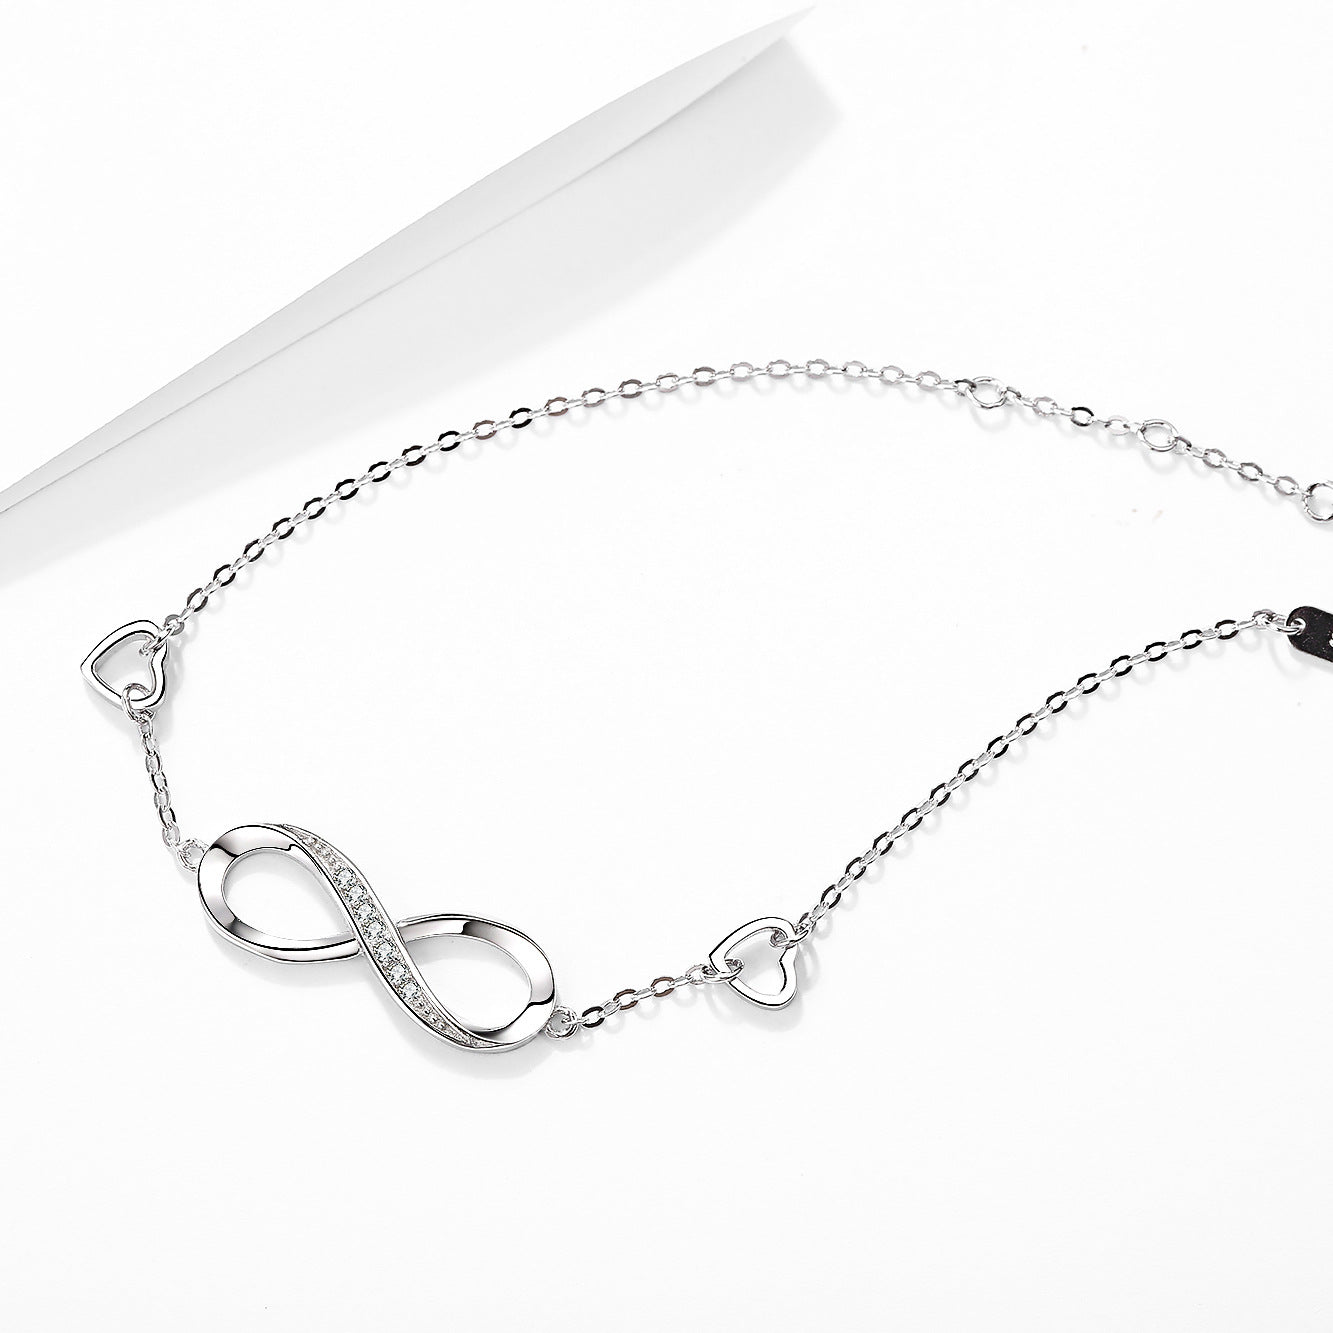 L - Infinity Bracelet Diamond Cubic Zirconia Crystal 925 Sterling Silver Hypoallergenic Gift